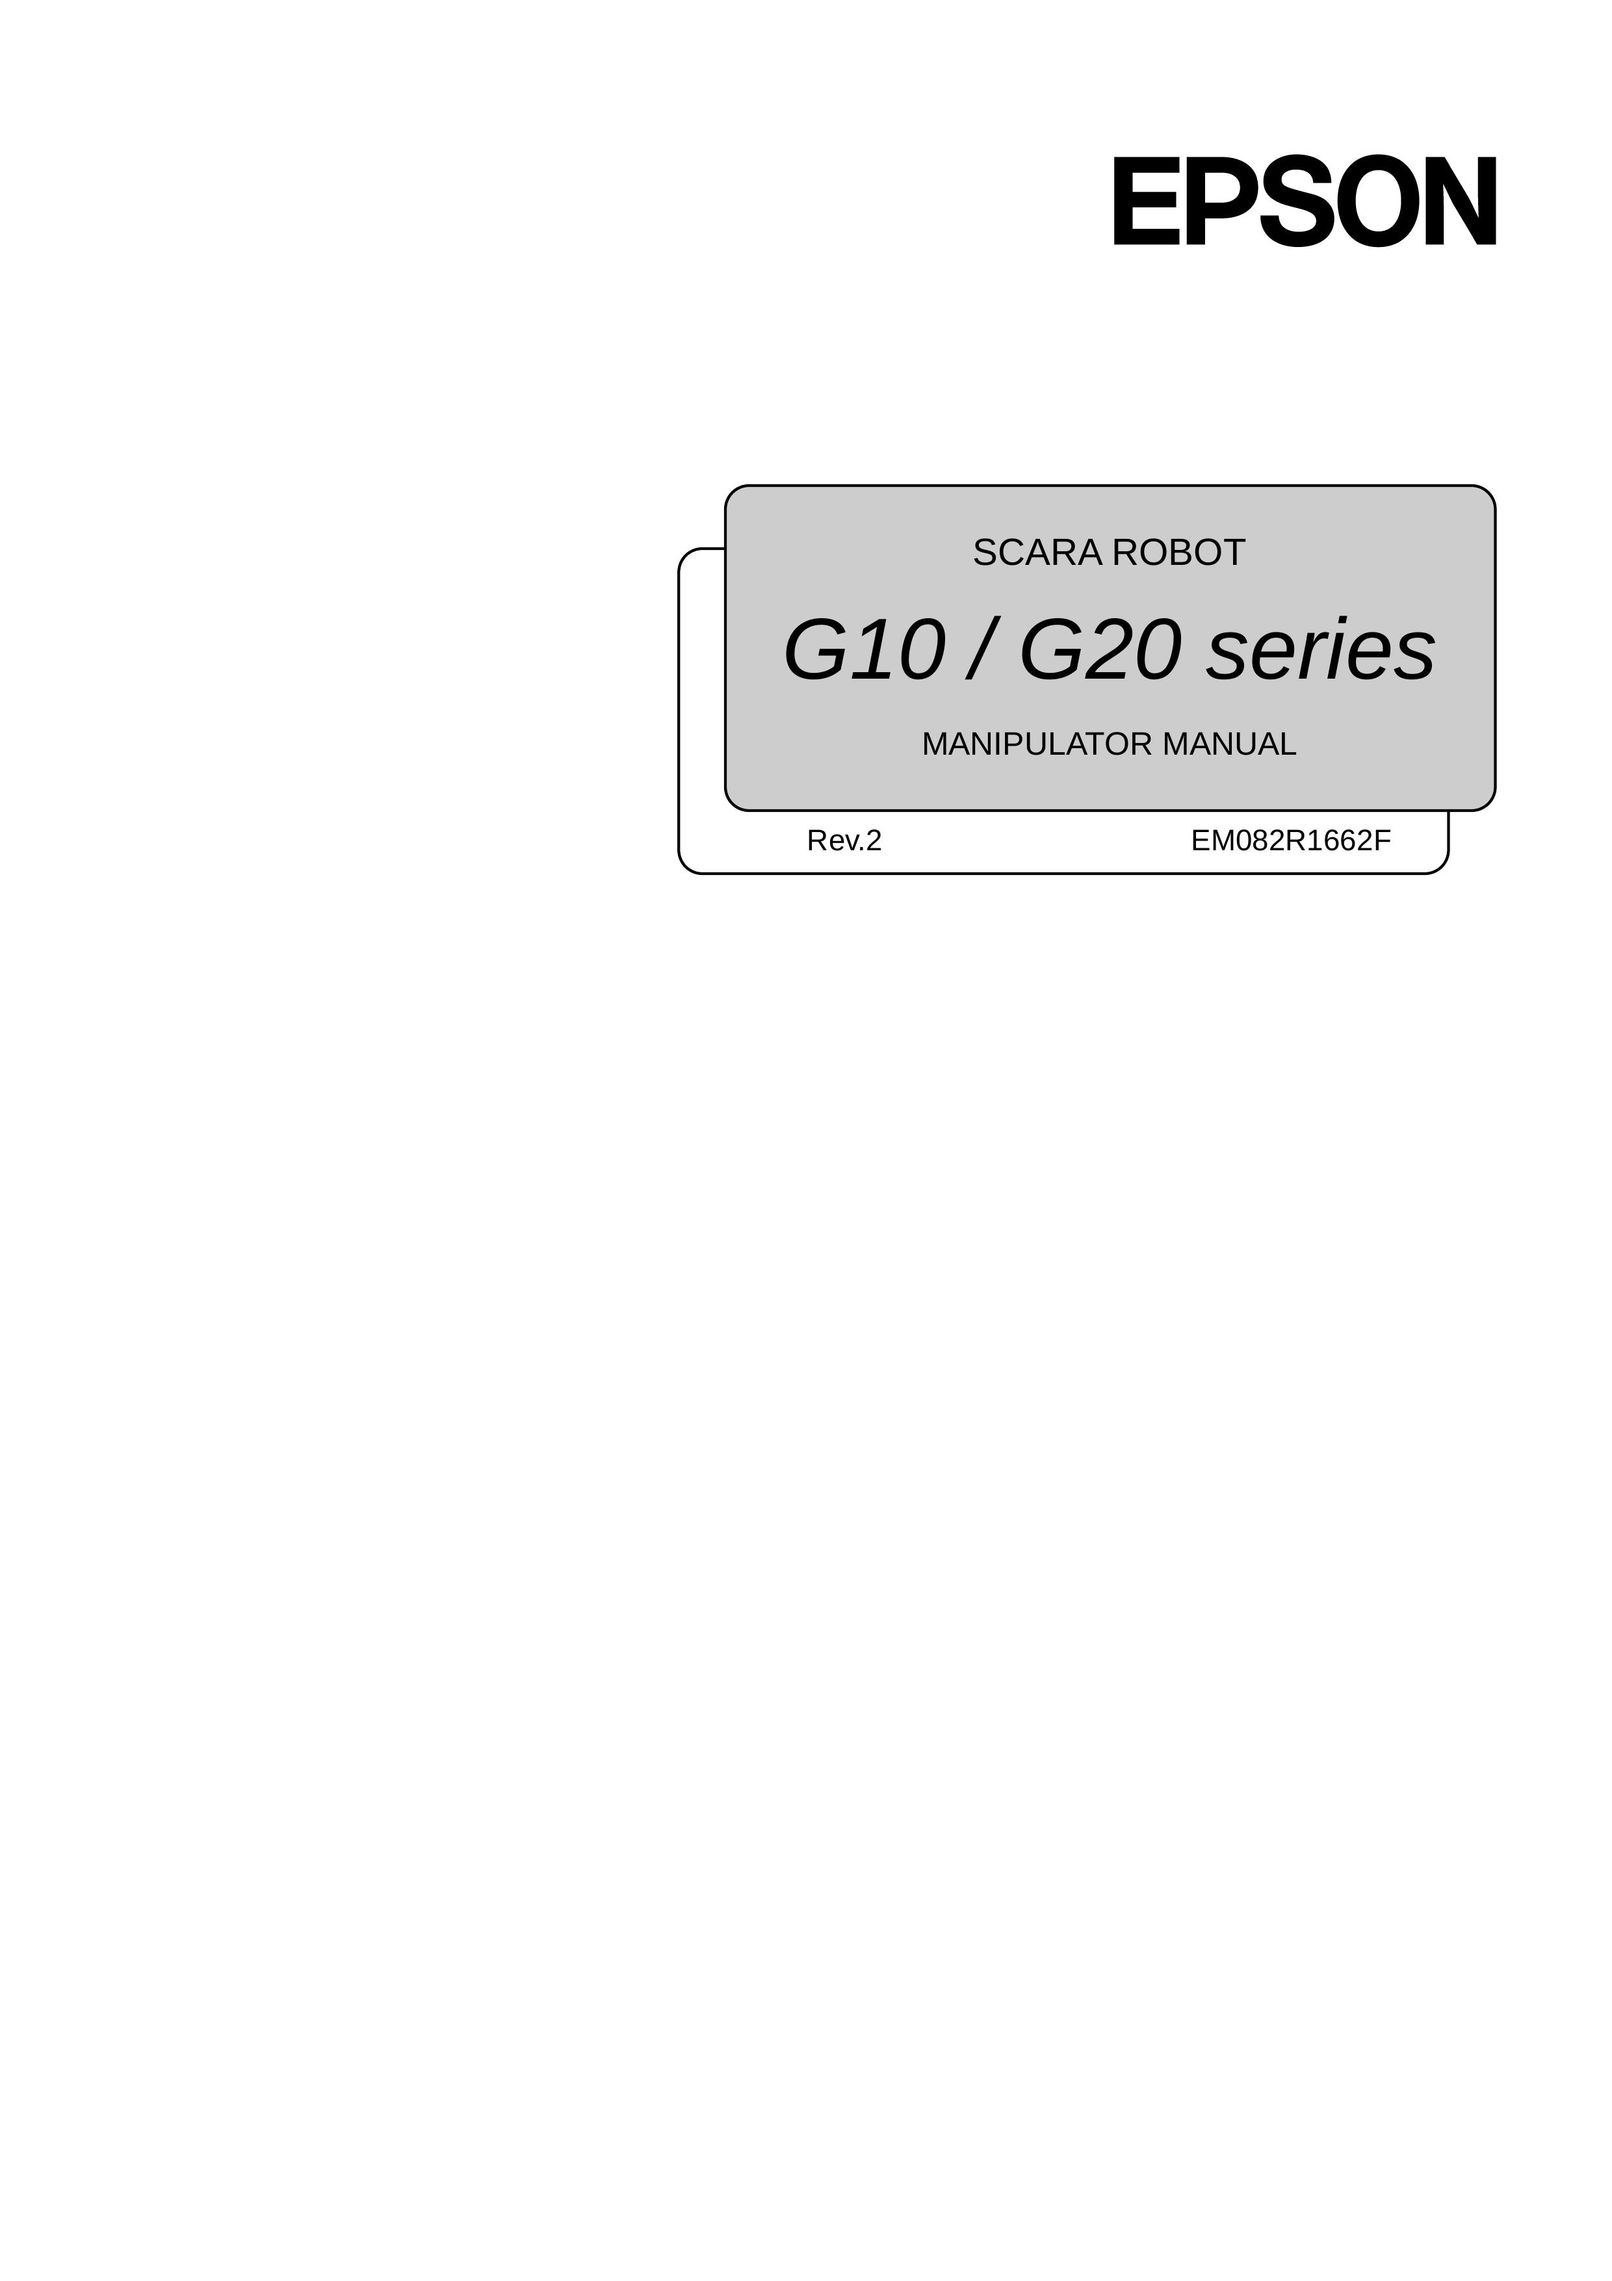 Epson G20 Series Robotics User Manual